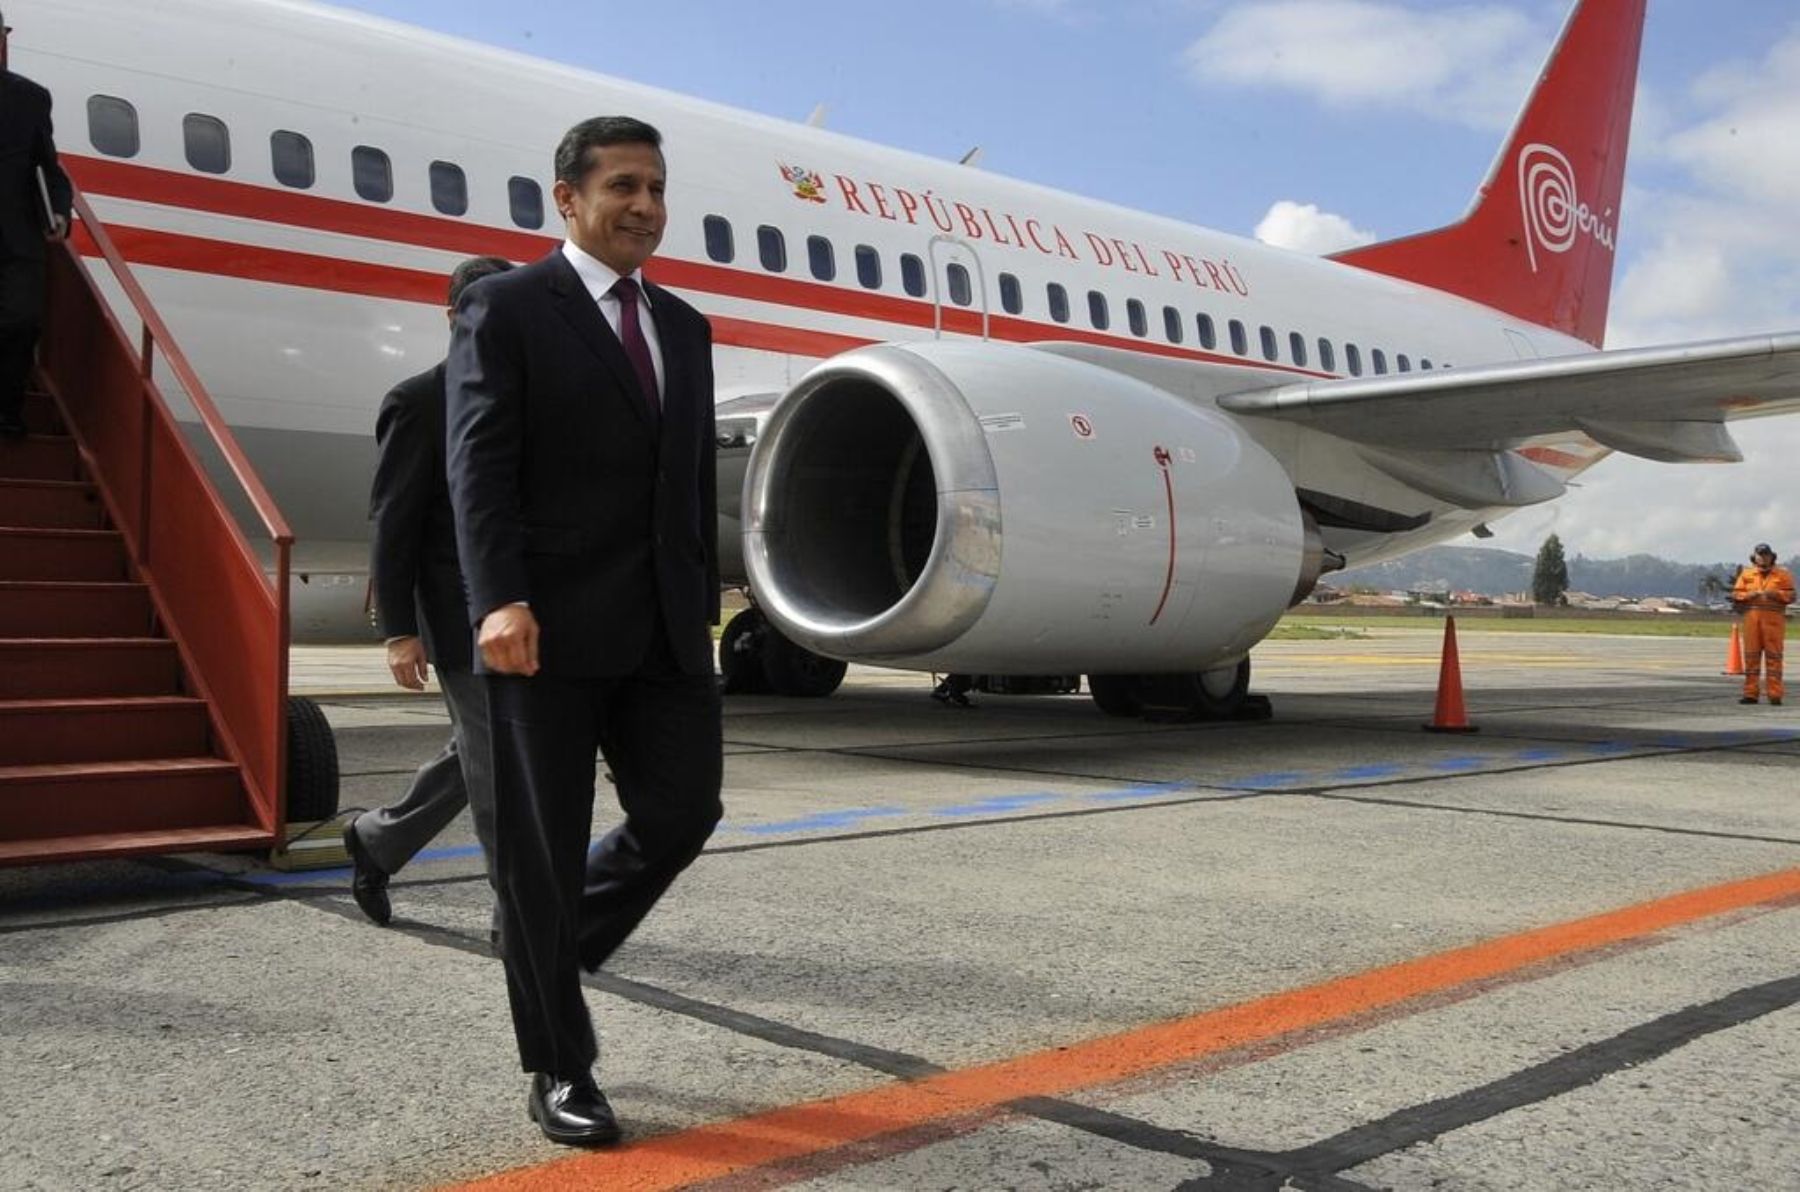 President Ollanta Humala arrives in Israel